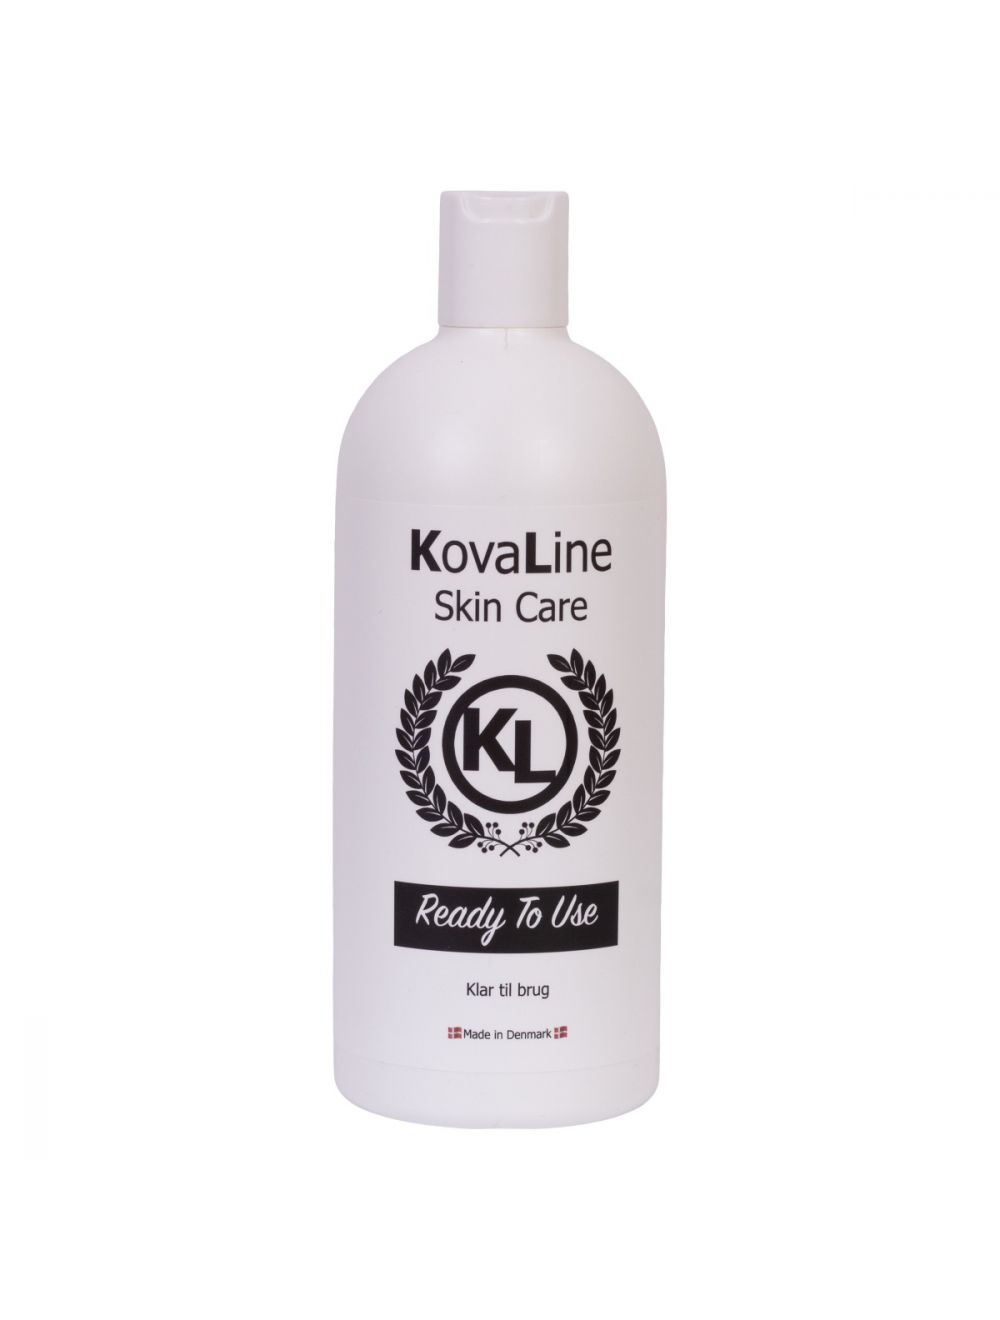 KovaLine - Ready to use - 500ml - (571326900001)